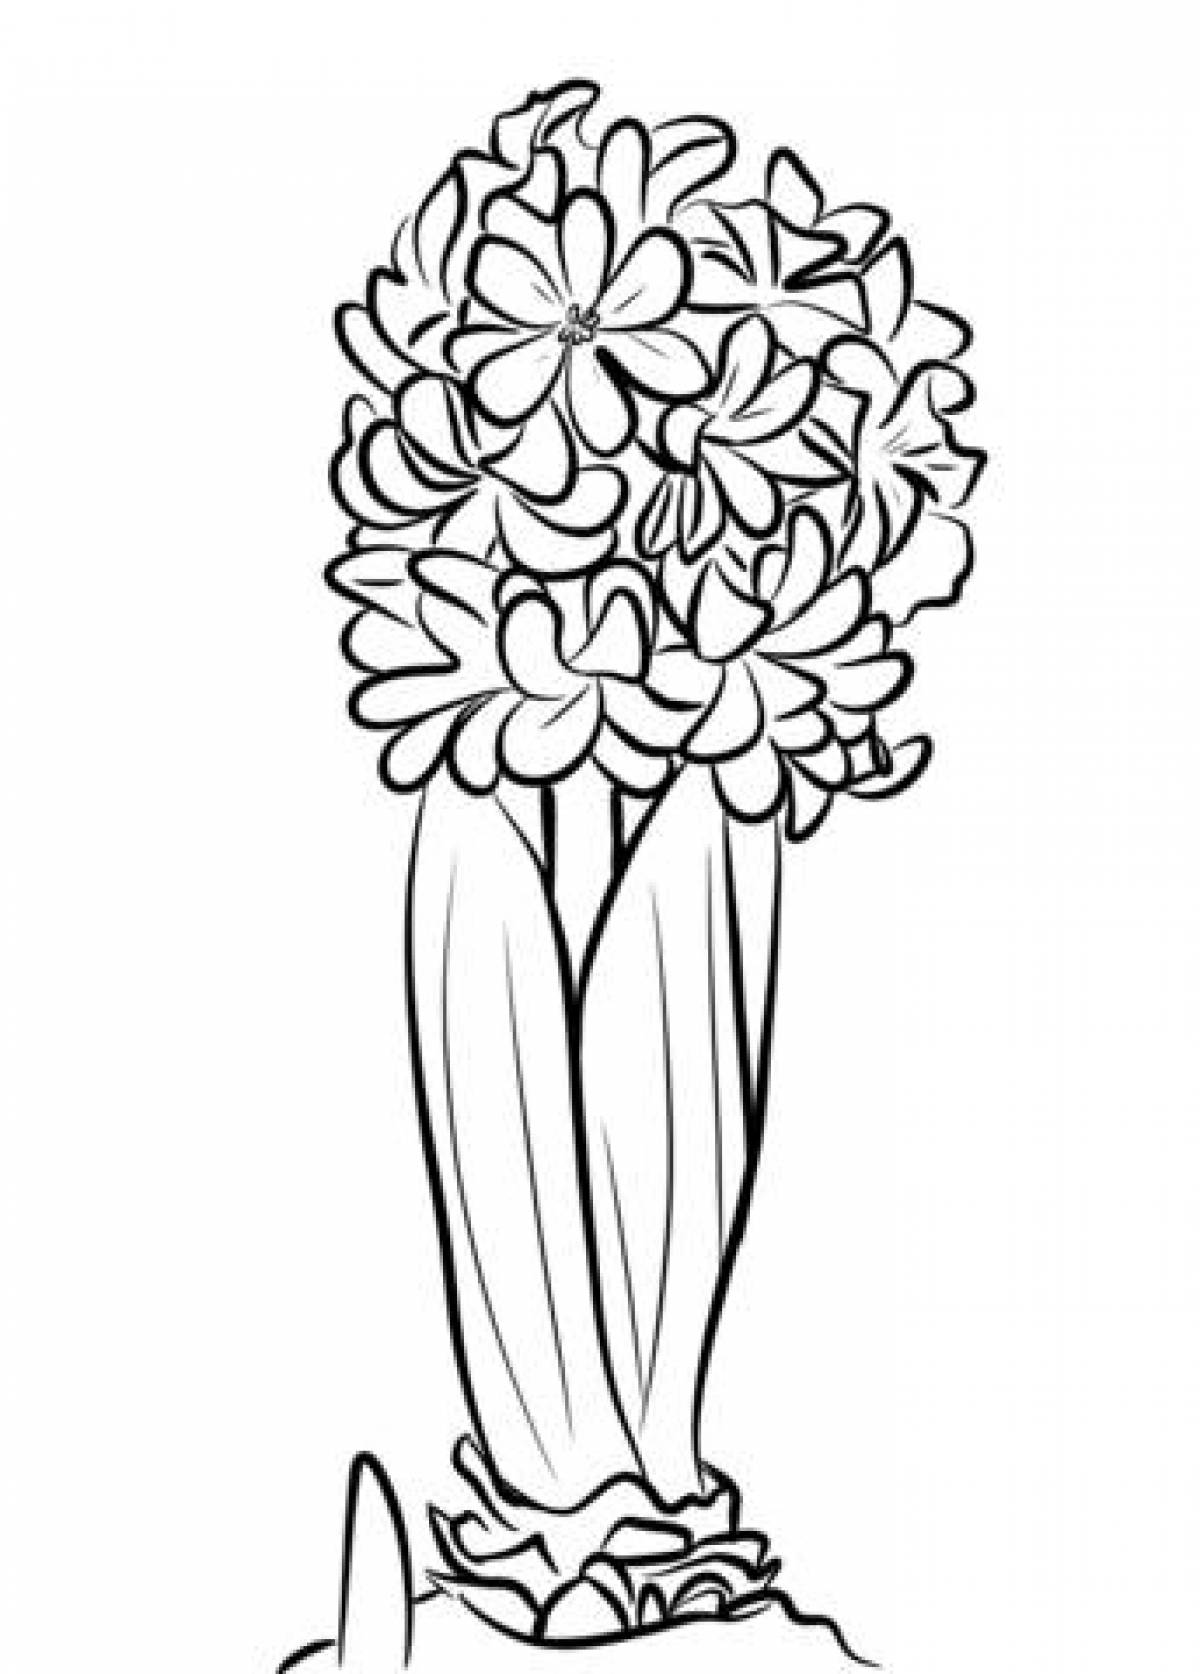 Drawing hyacinth